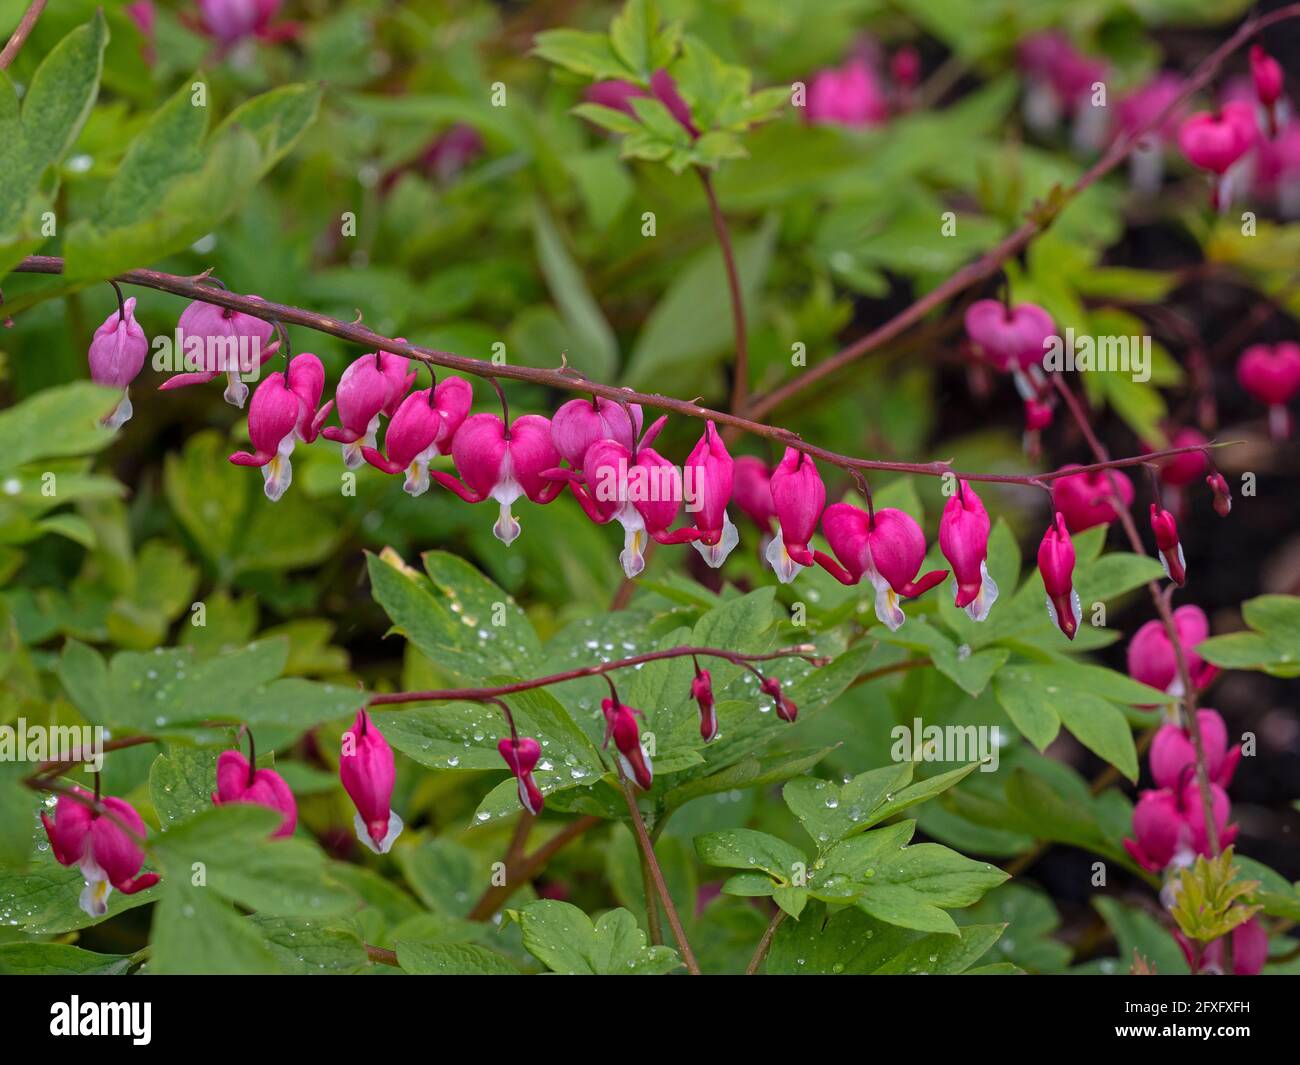 Bleeding heart Plant Lamprocapnos spectabilis in rain shower Stock Photo